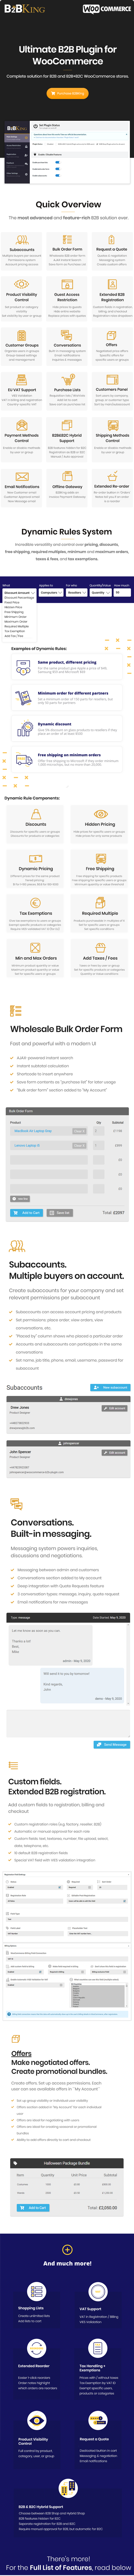 B2BKing - The Ultimate WooCommerce B2B & Wholesale Plugin - 10